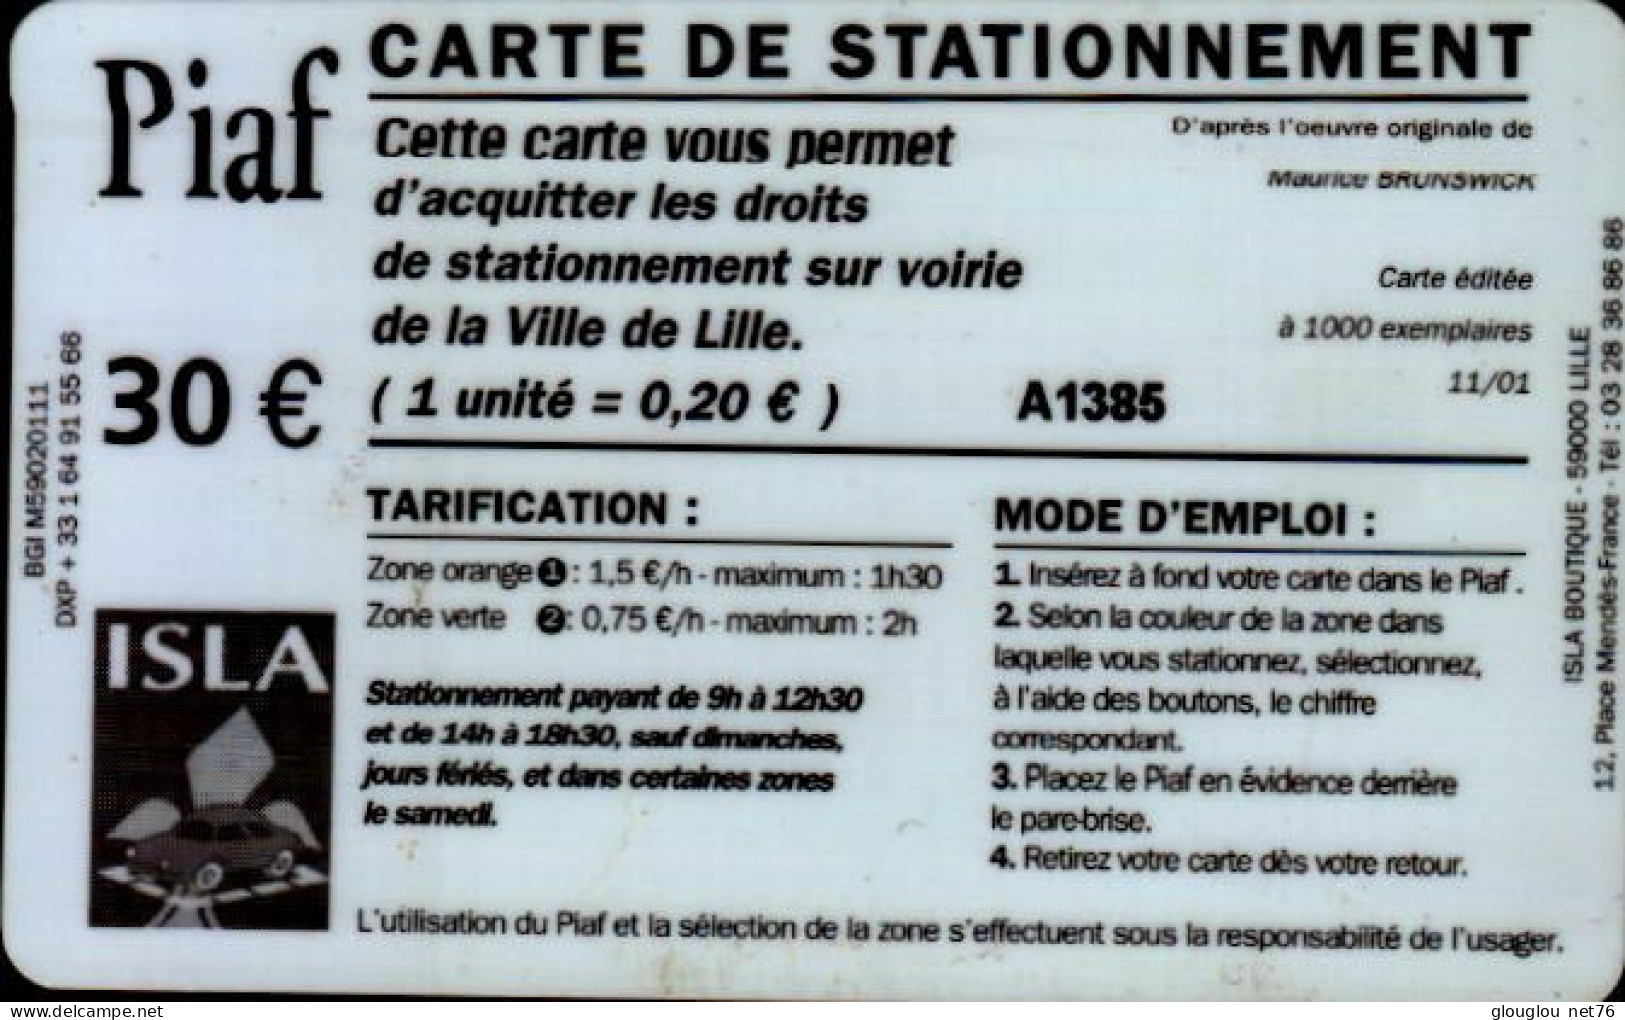 CARTE DE STATIONNEMENT PIAF..30e.. ISLA - PIAF Parking Cards